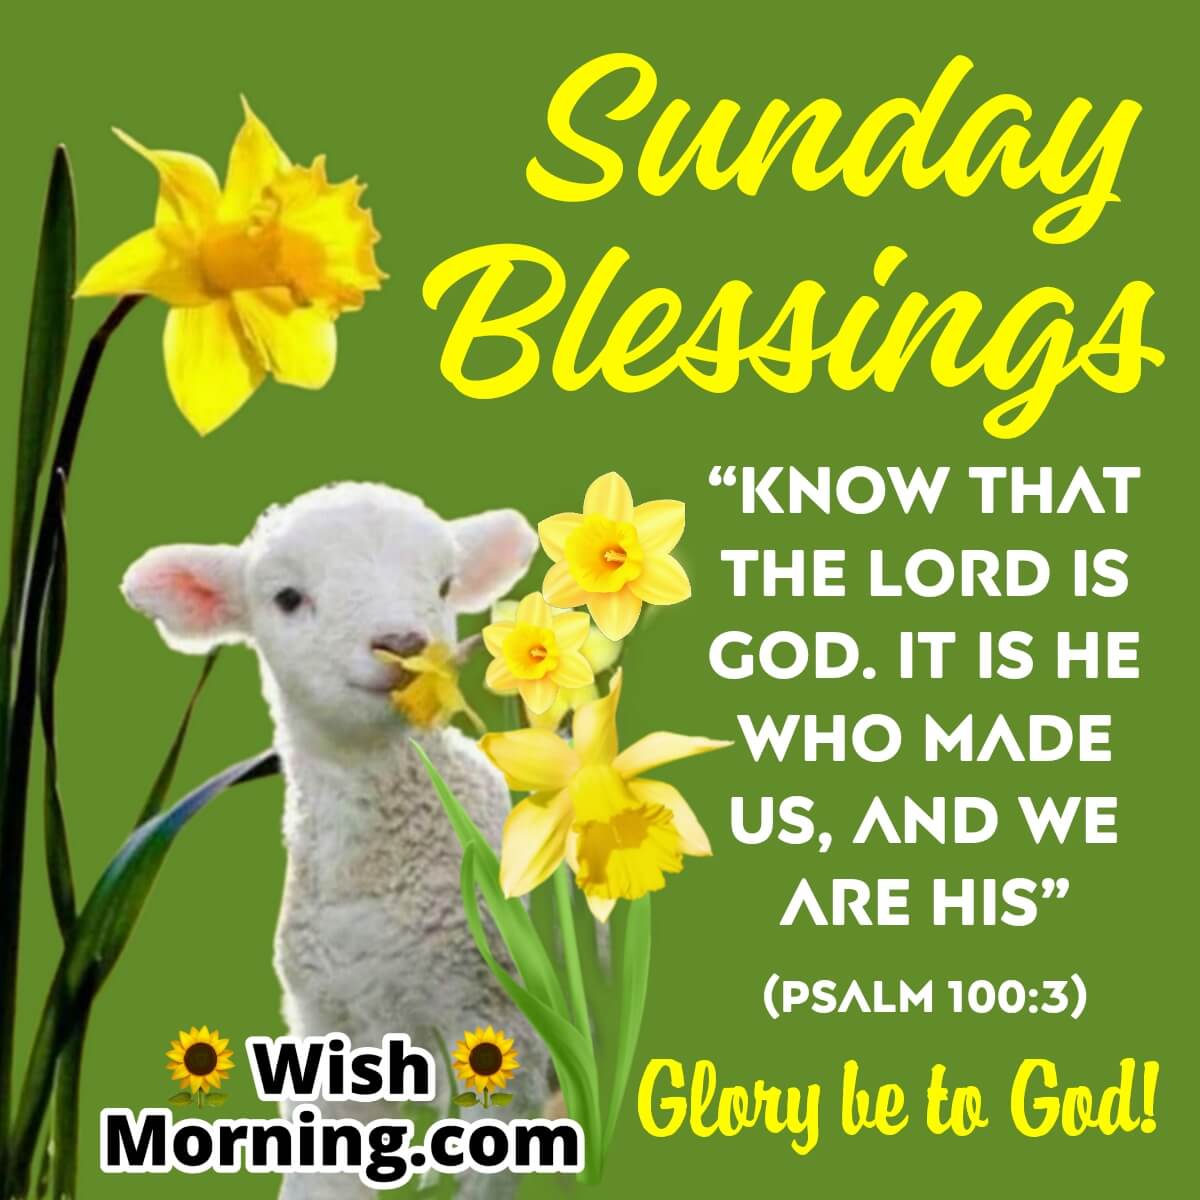 Sunday Blessings Image